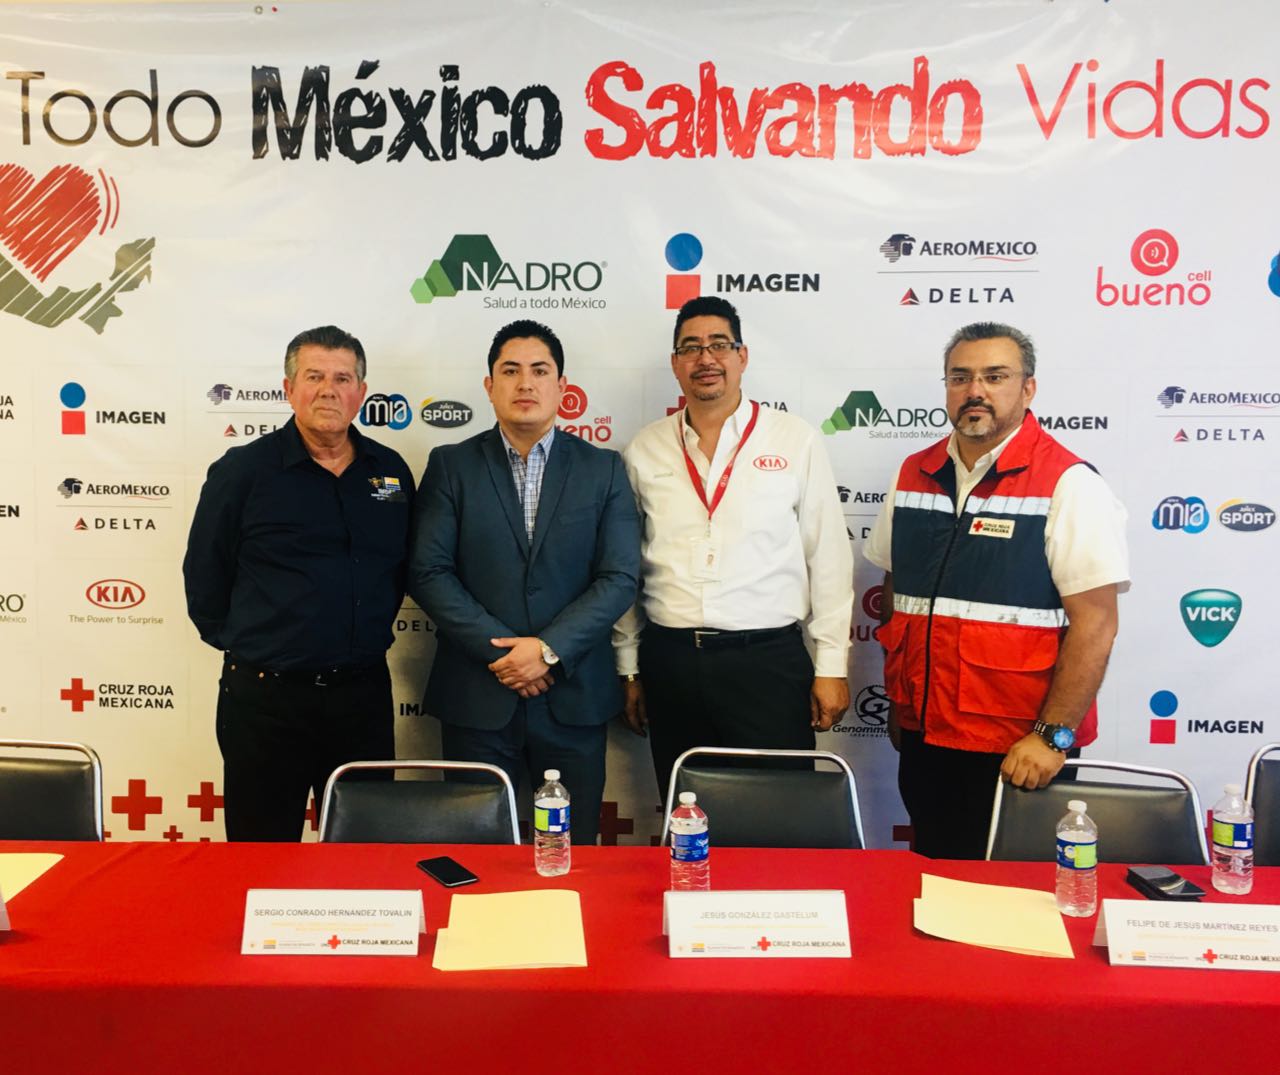 Anuncian IMDER y Cruz Roja Mexicana 2da edicion de “Todo México salvando vidas“